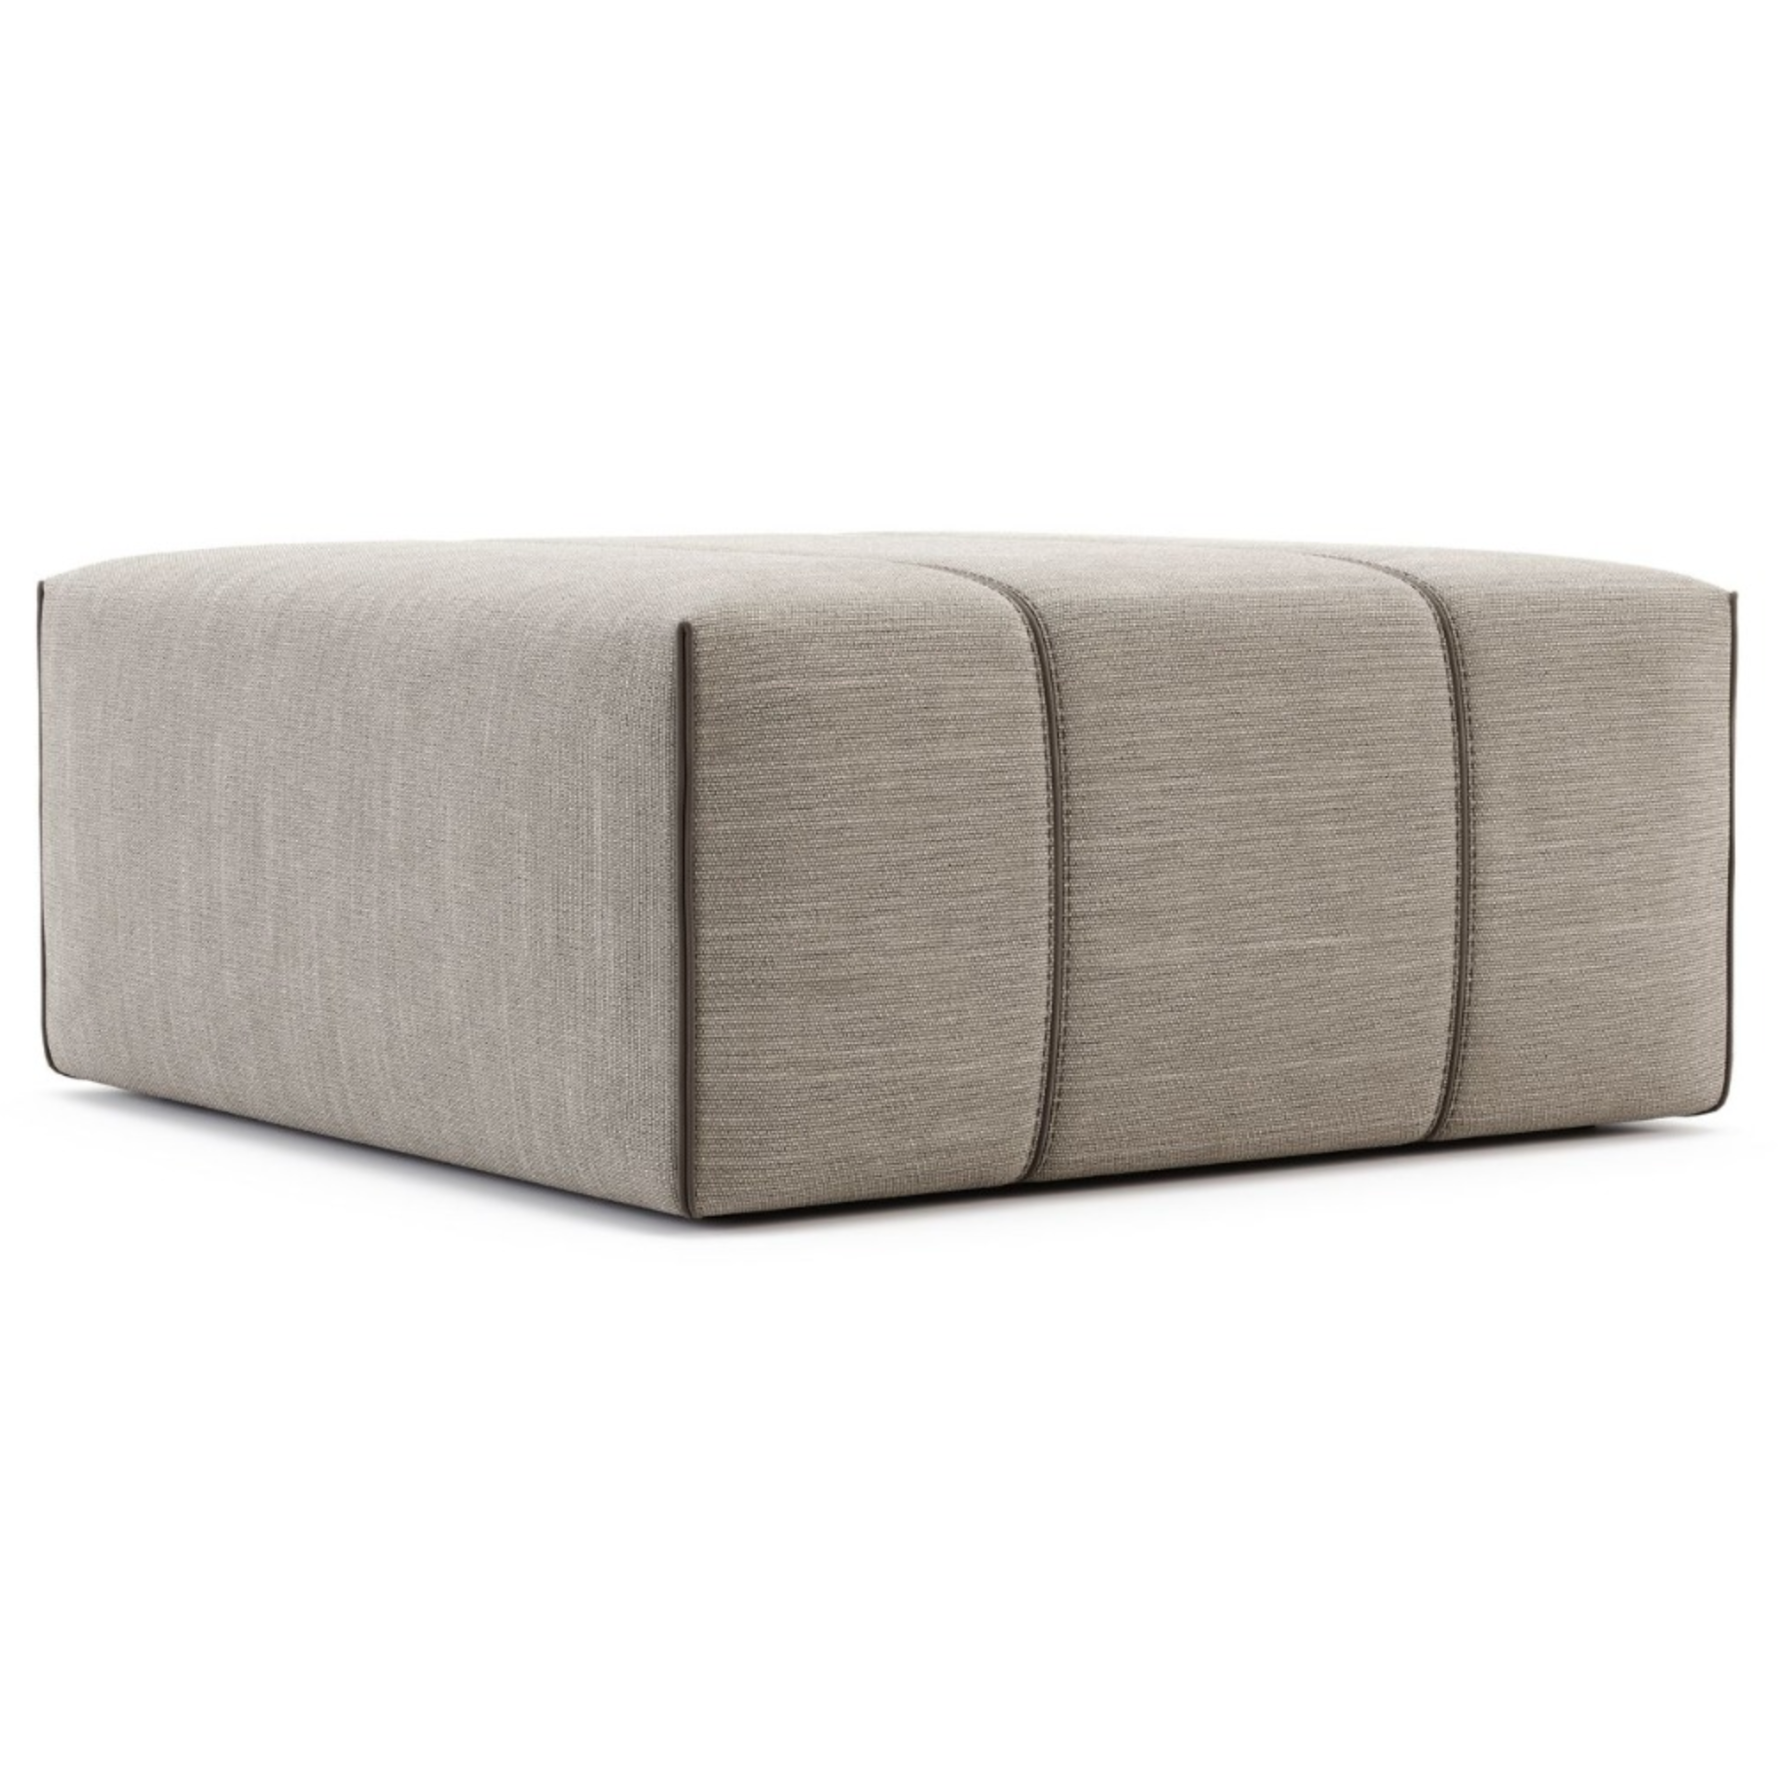 Domkapa Grant Large Pouffe - Customisable | Modern Furniture + Decor